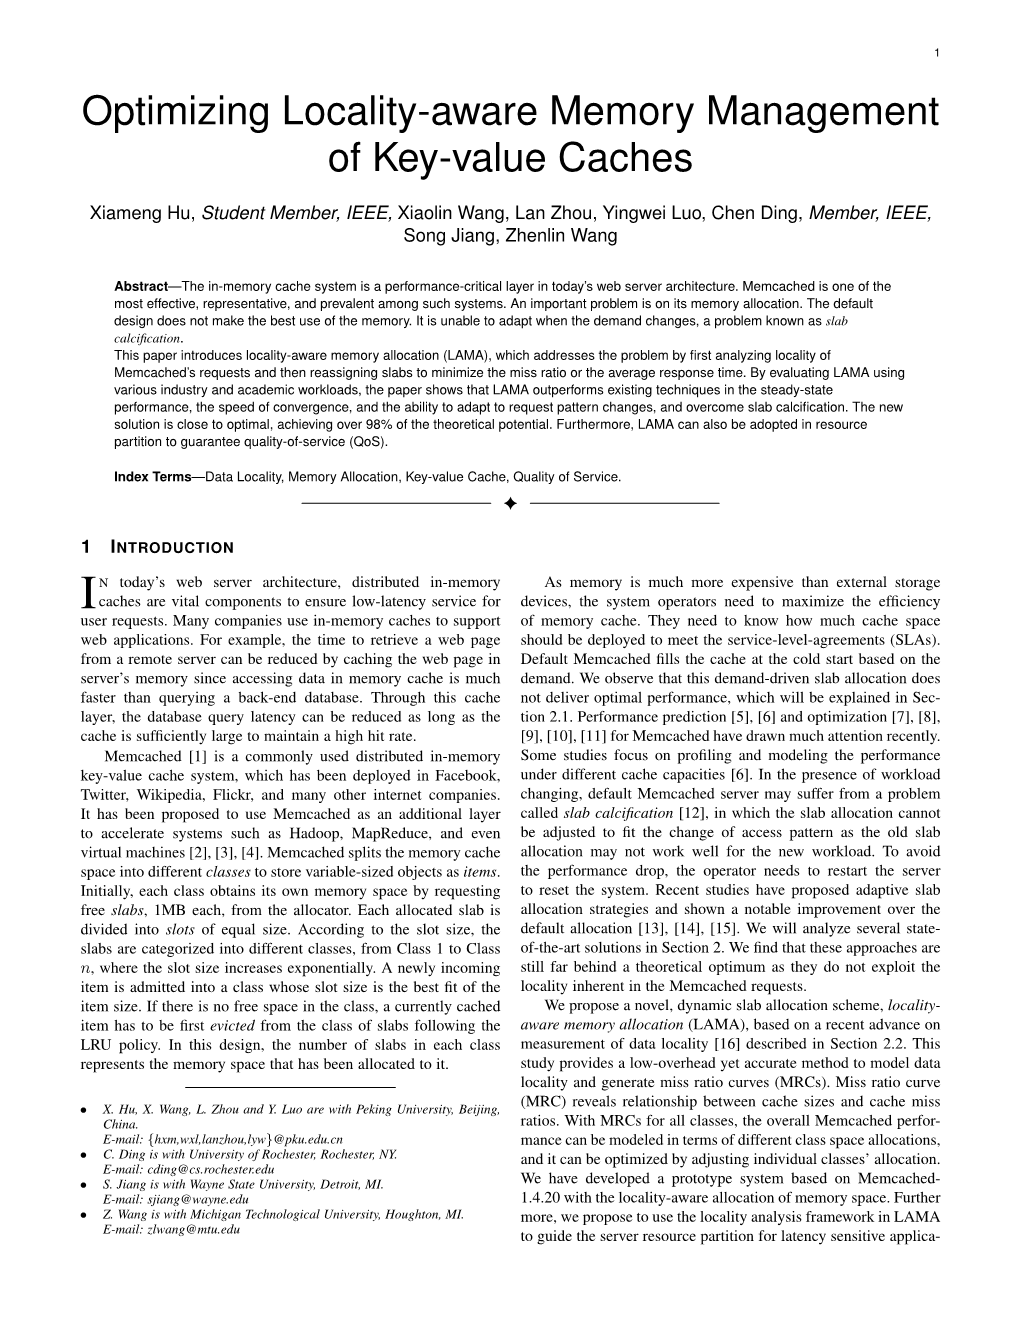 Optimizing Locality-Aware Memory Management of Key-Value Caches